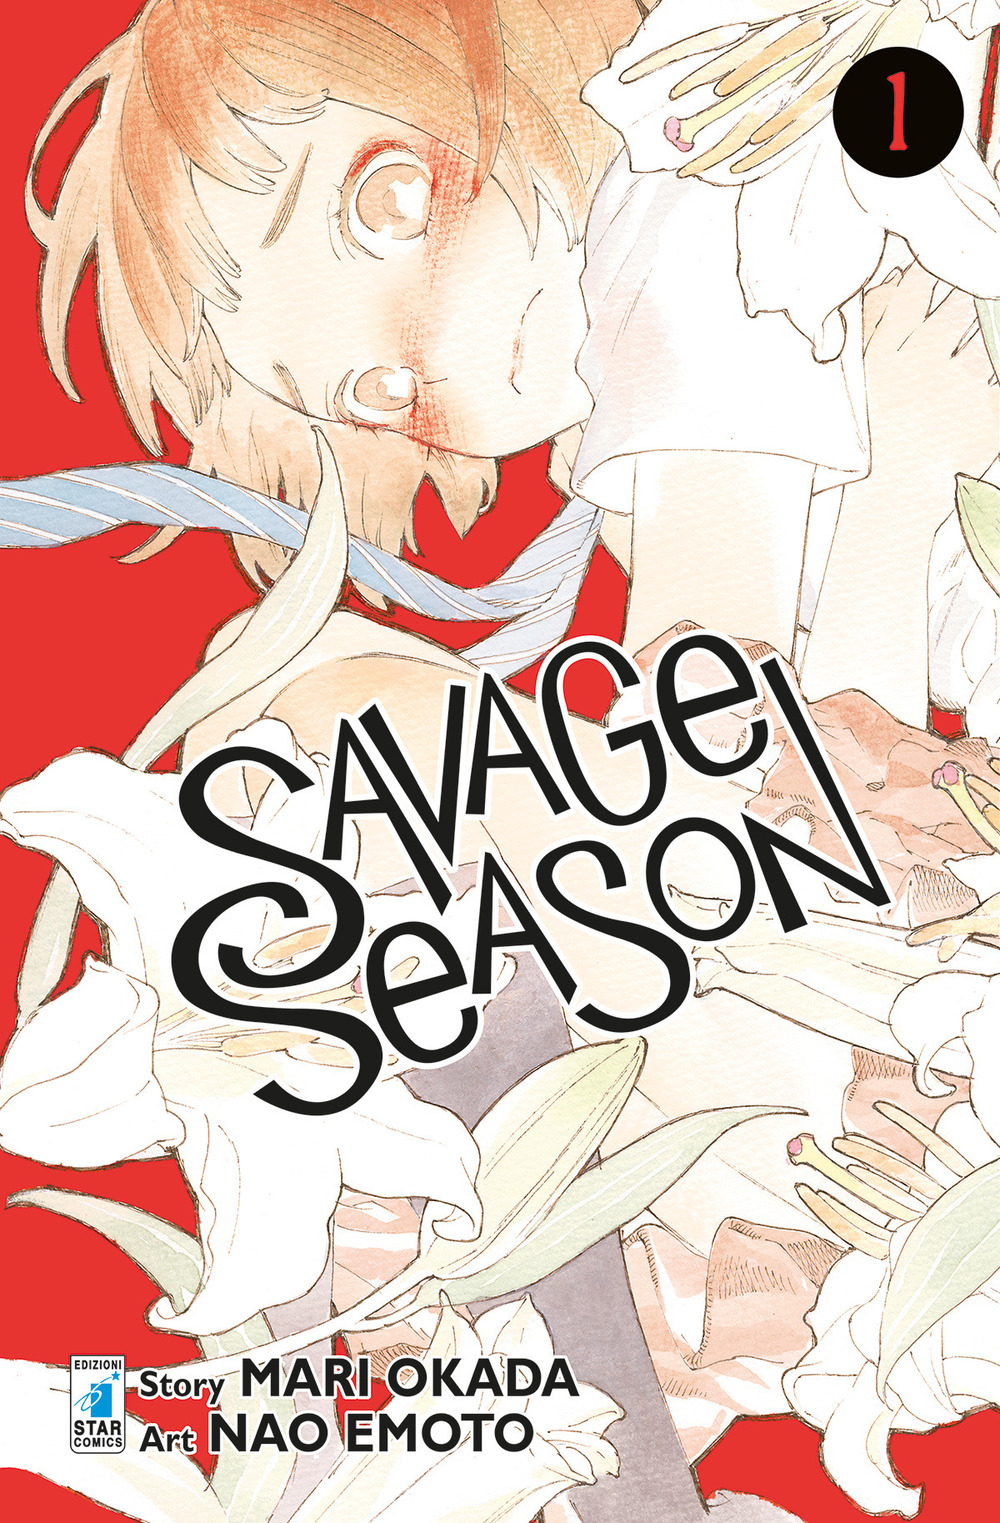 Savage season. Vol. 1